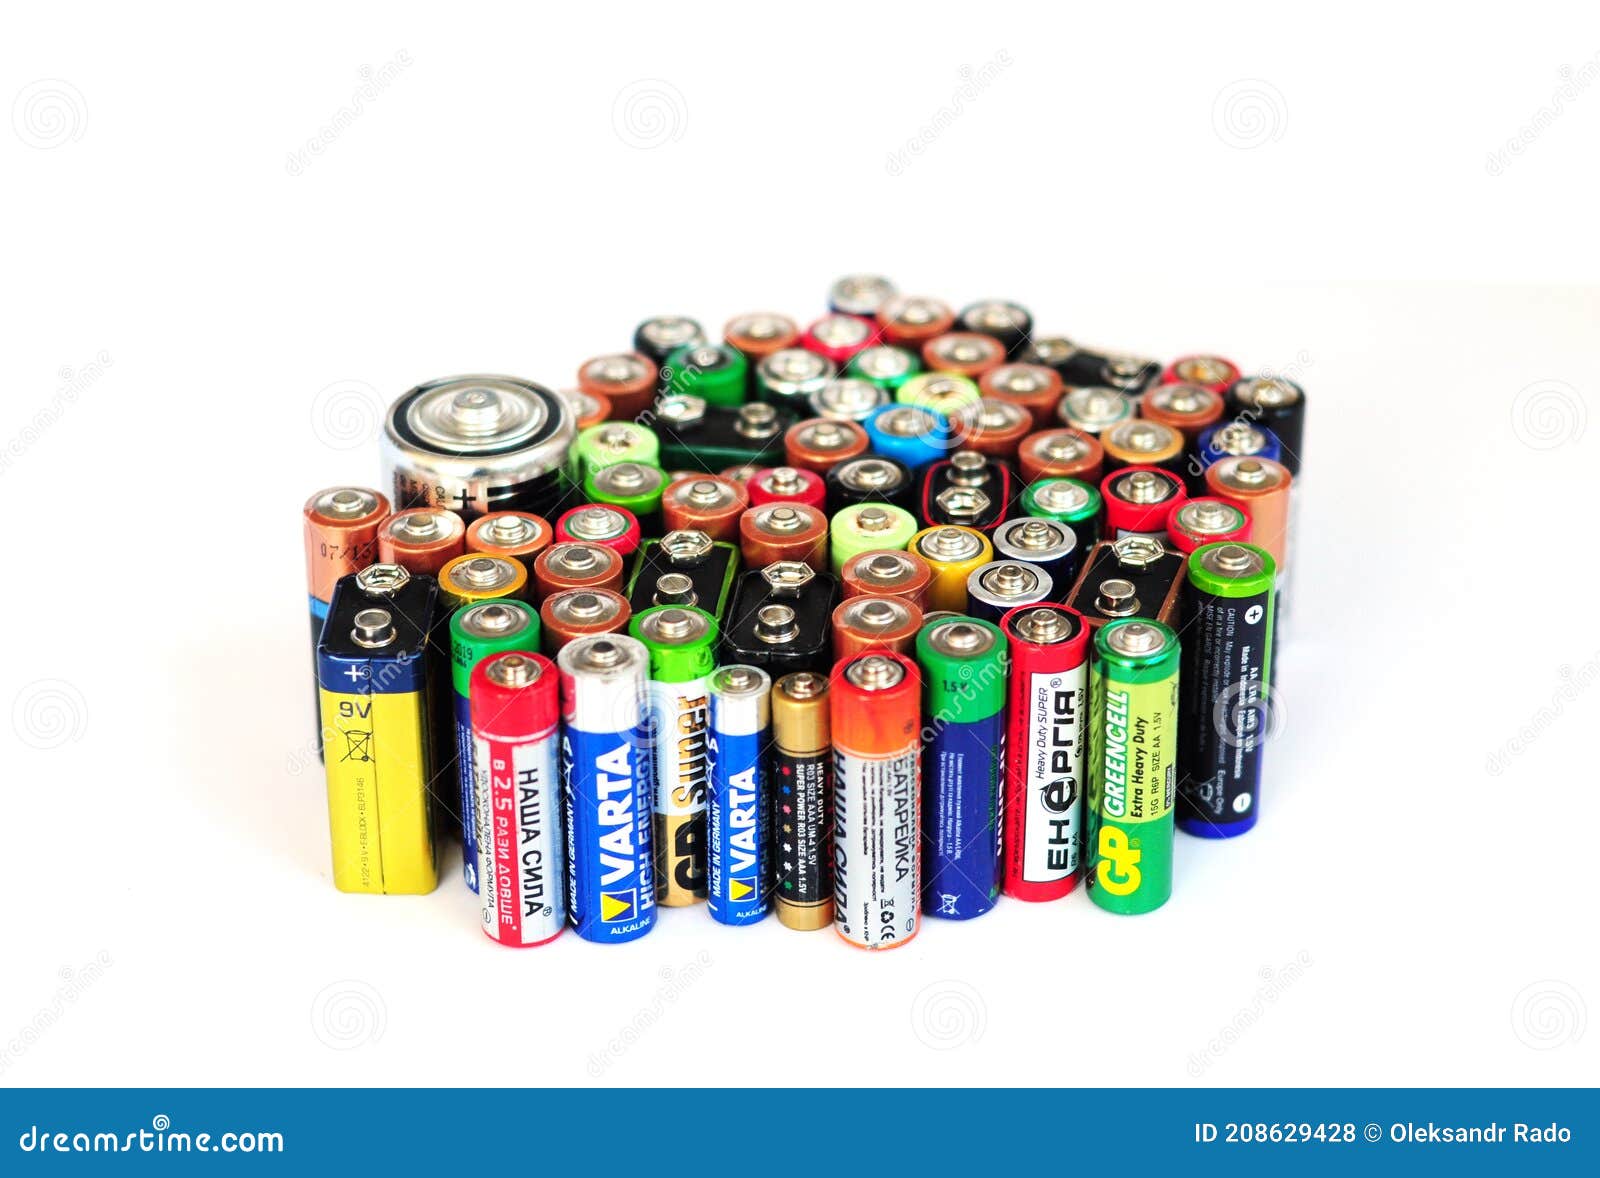 Lithium Batteries Types